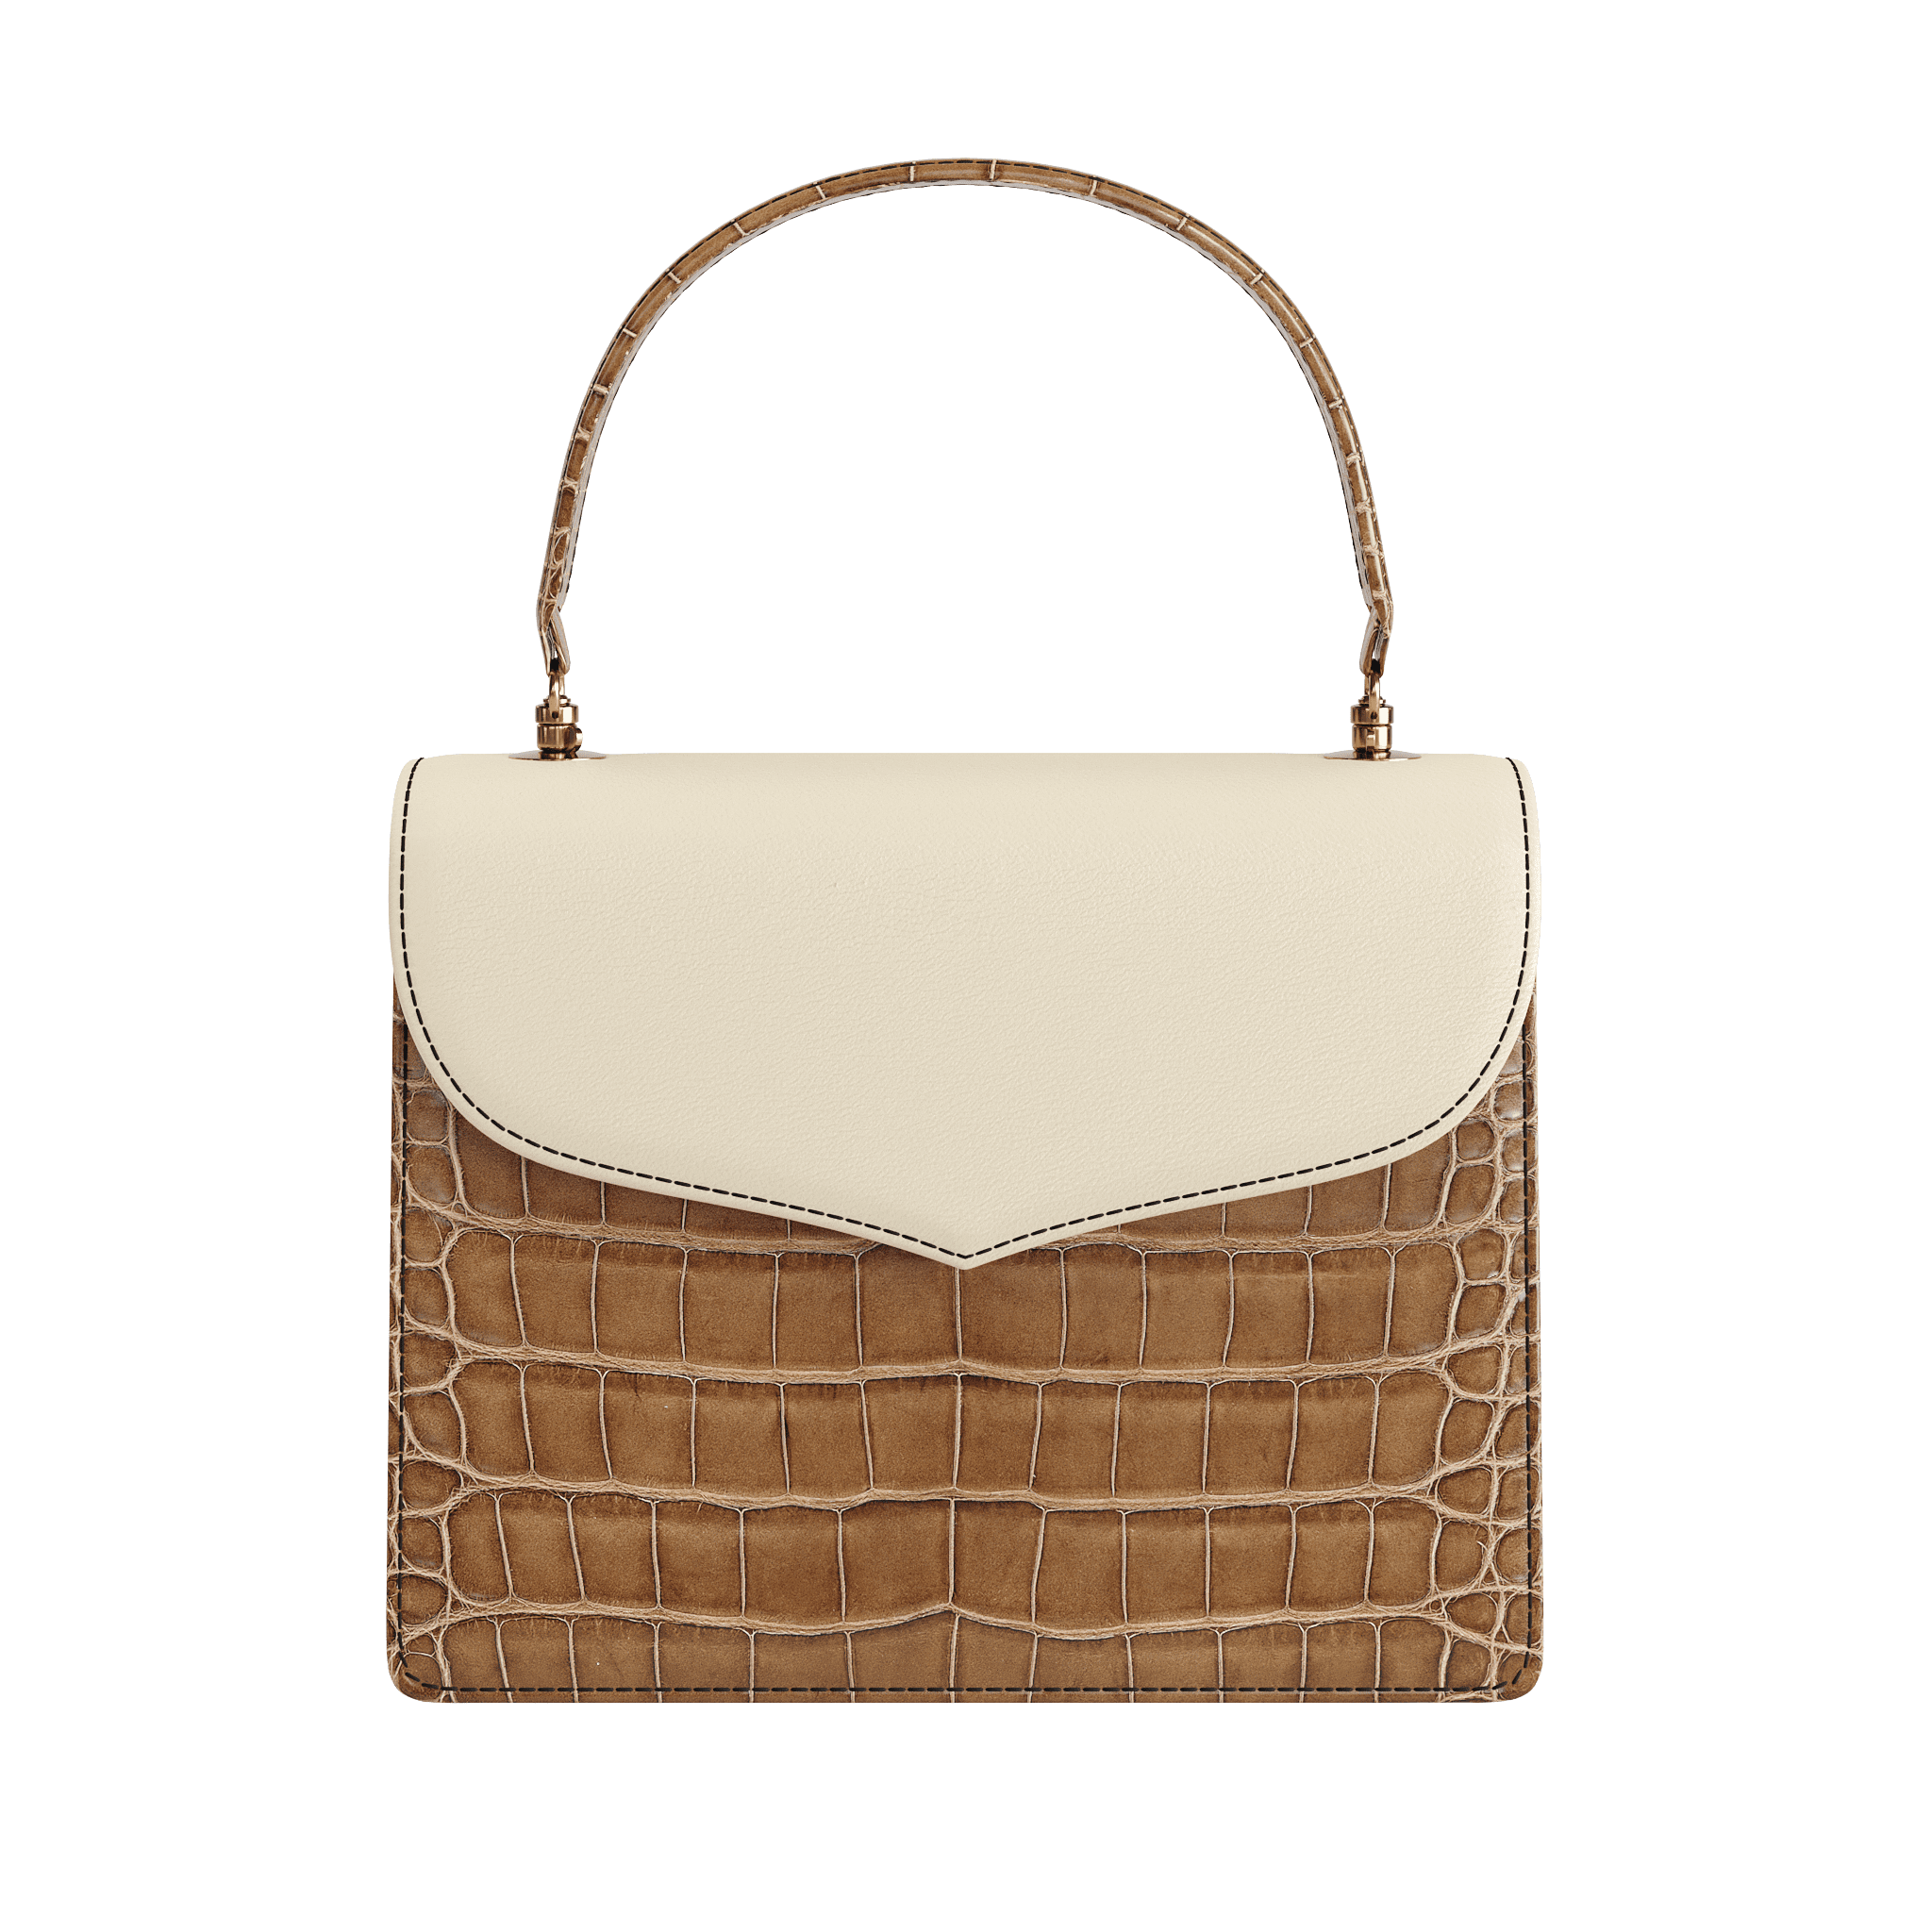 Luxury Authentic Alligator Handbag With Cream Top Flap